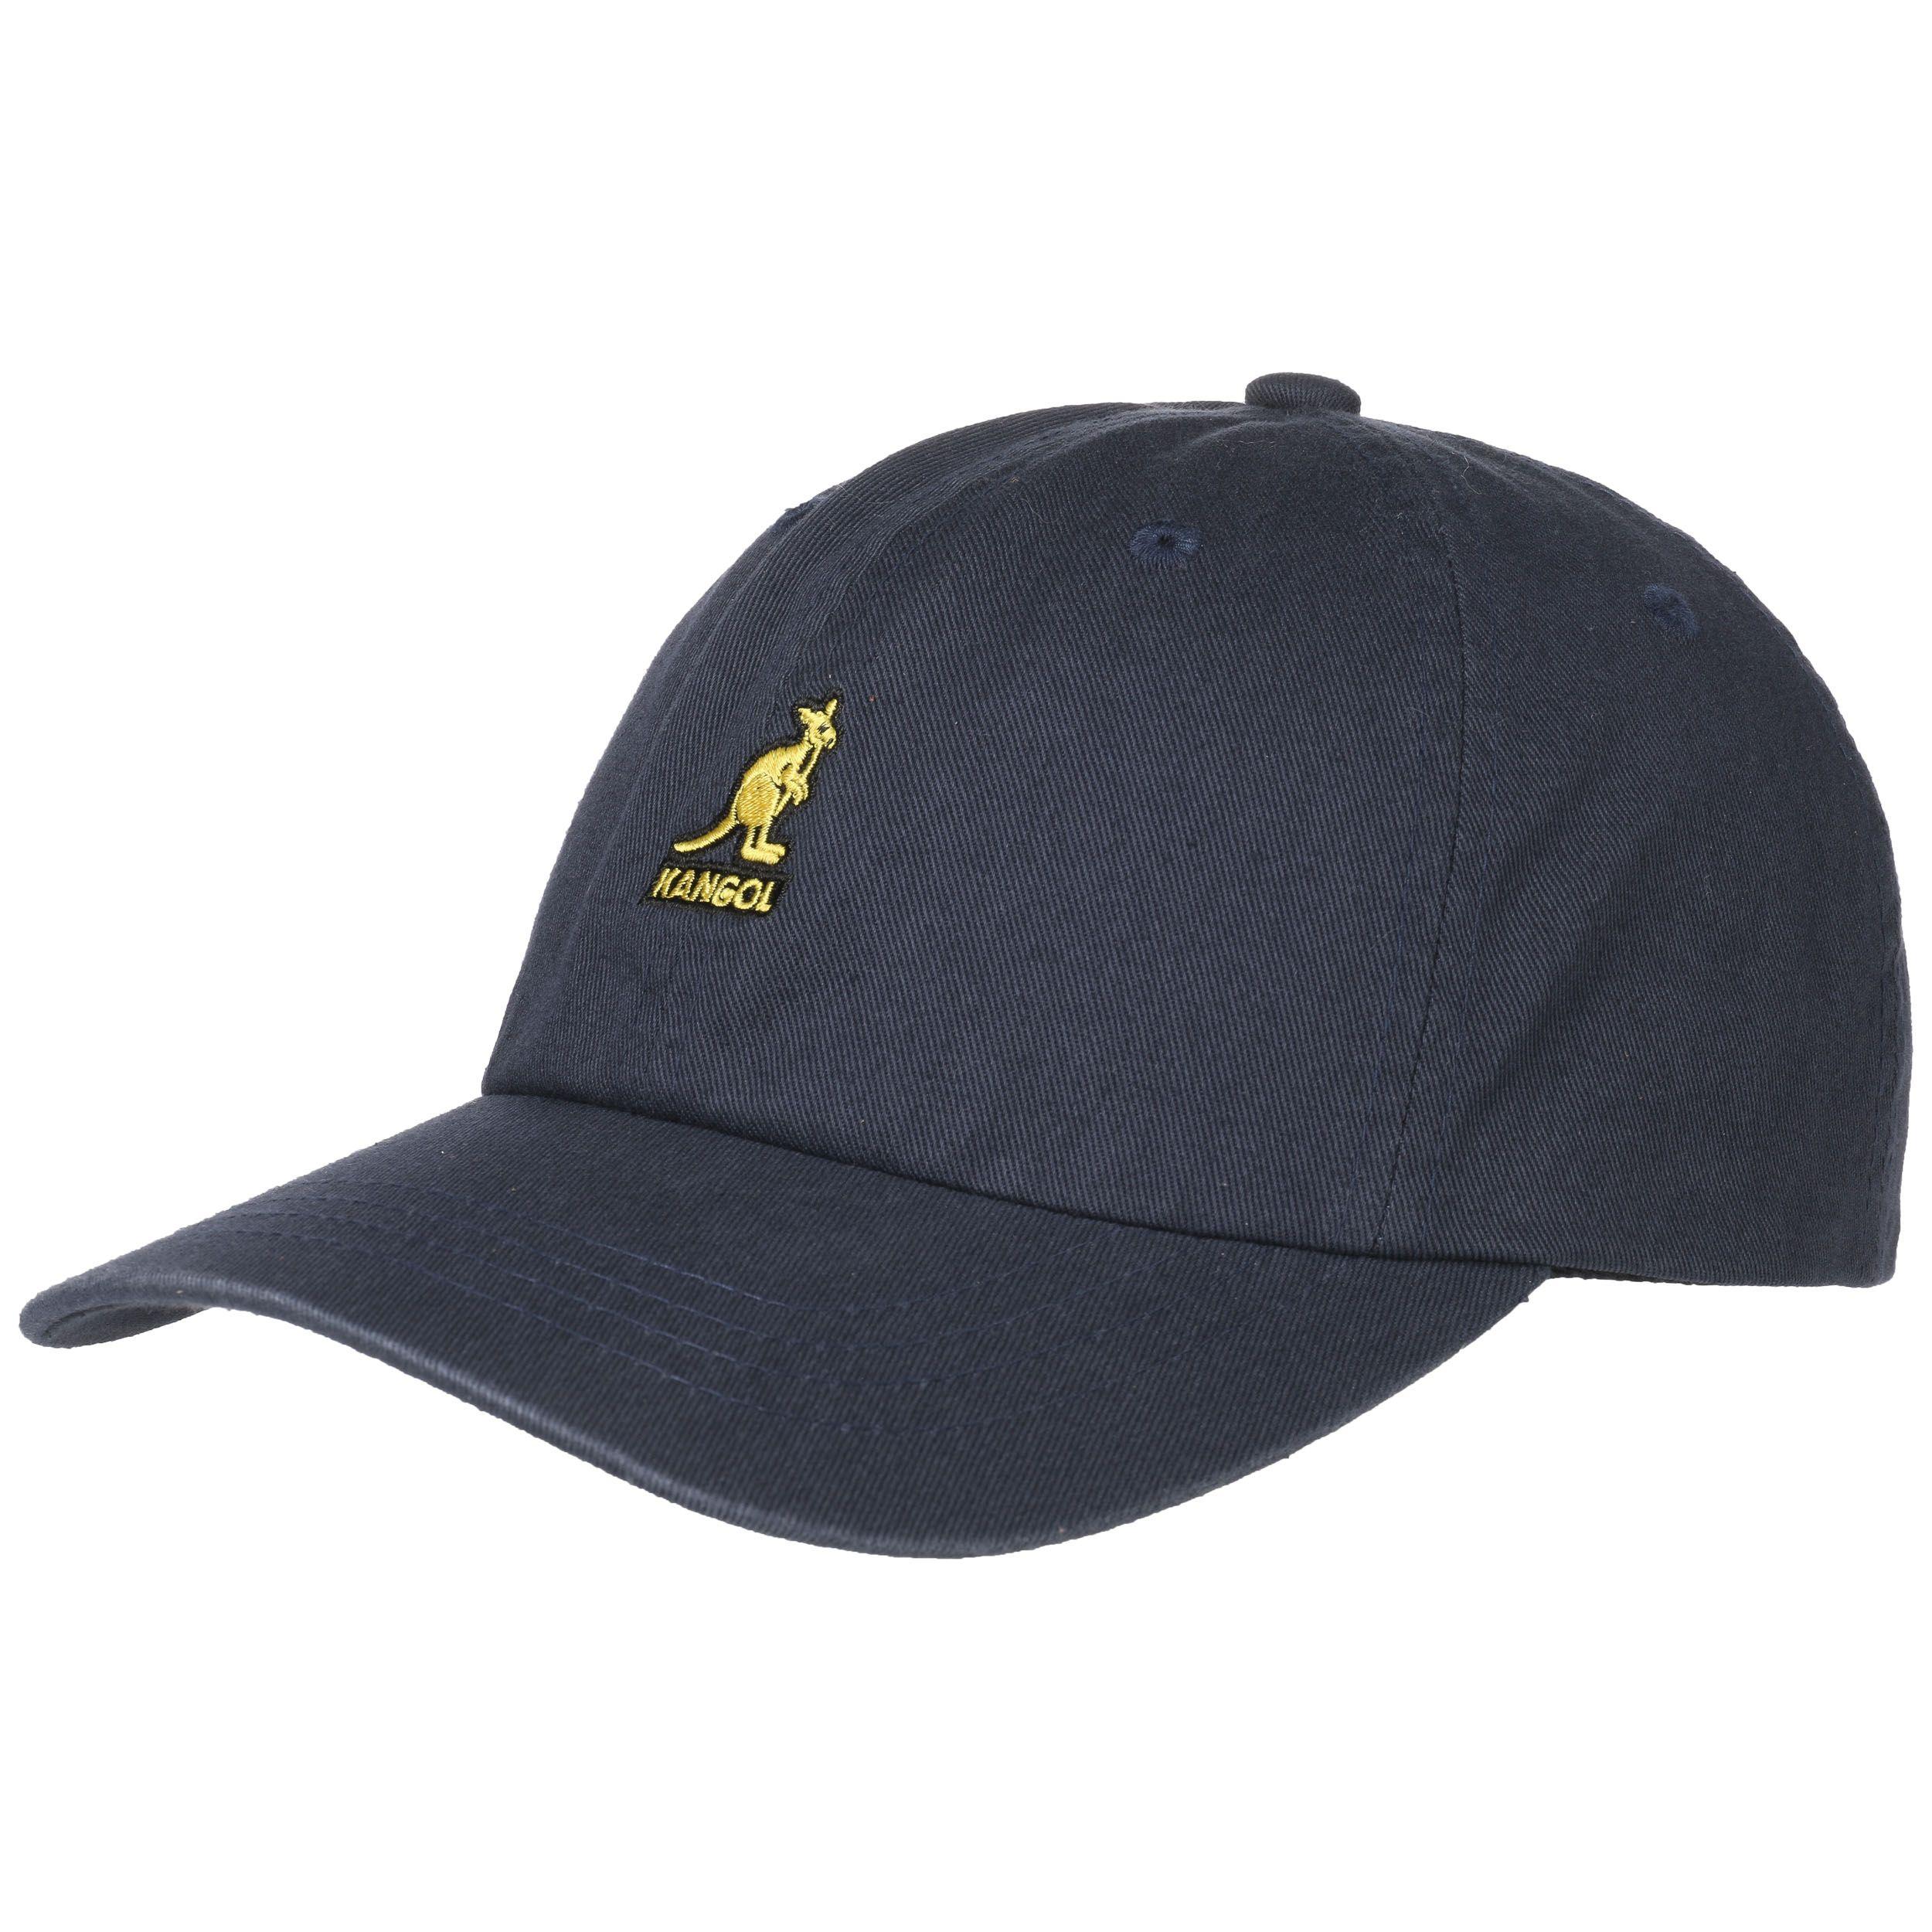 Kangol Hats Logo - Washed Dad Hat Baseball Cap by Kangol, EUR 39,95 --> Hats, caps ...